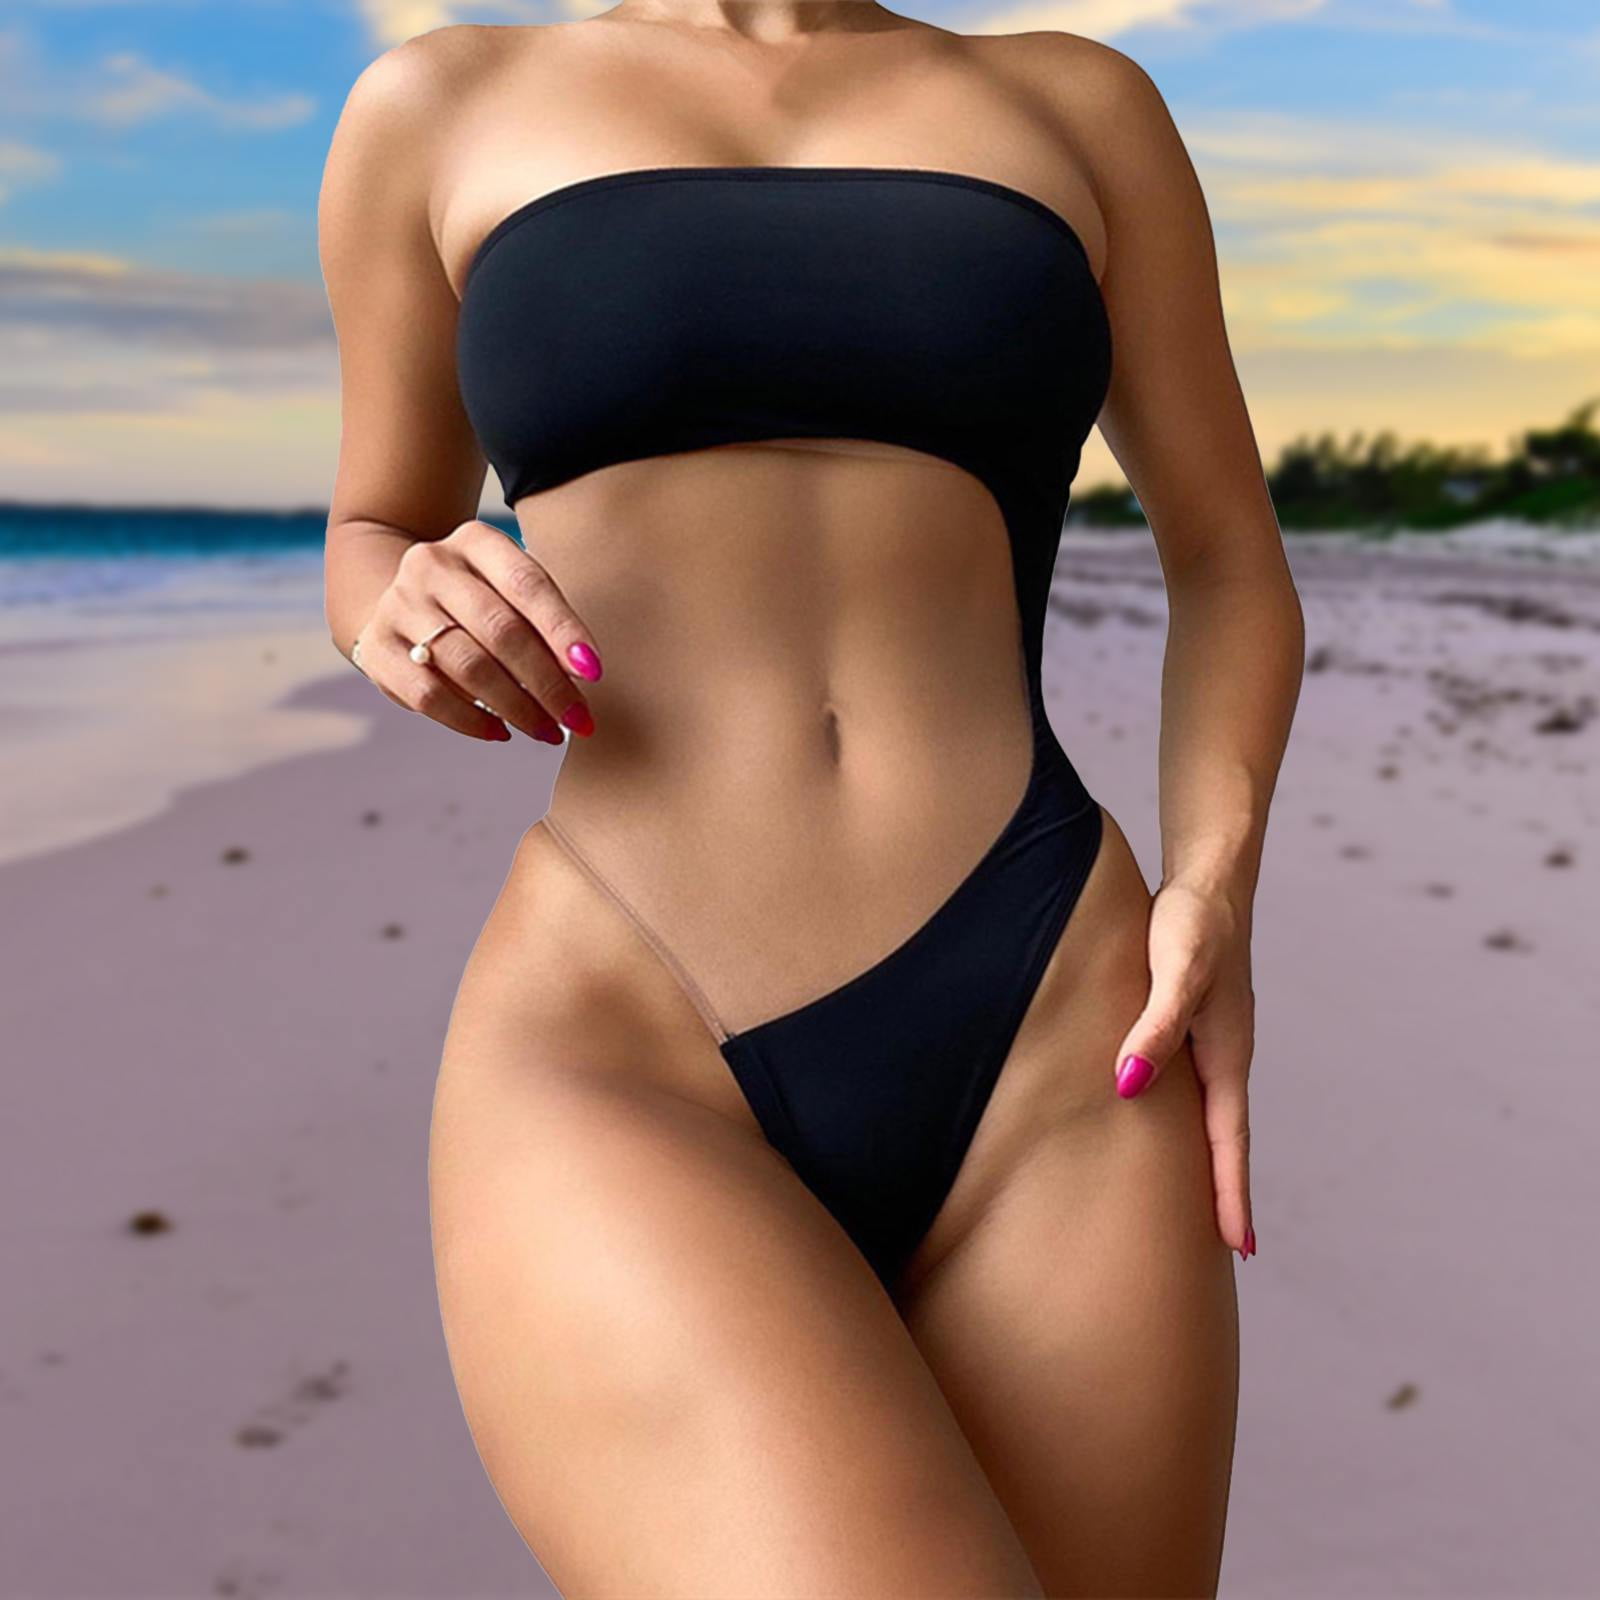 brent mallett recommends hot gf in bikini pic